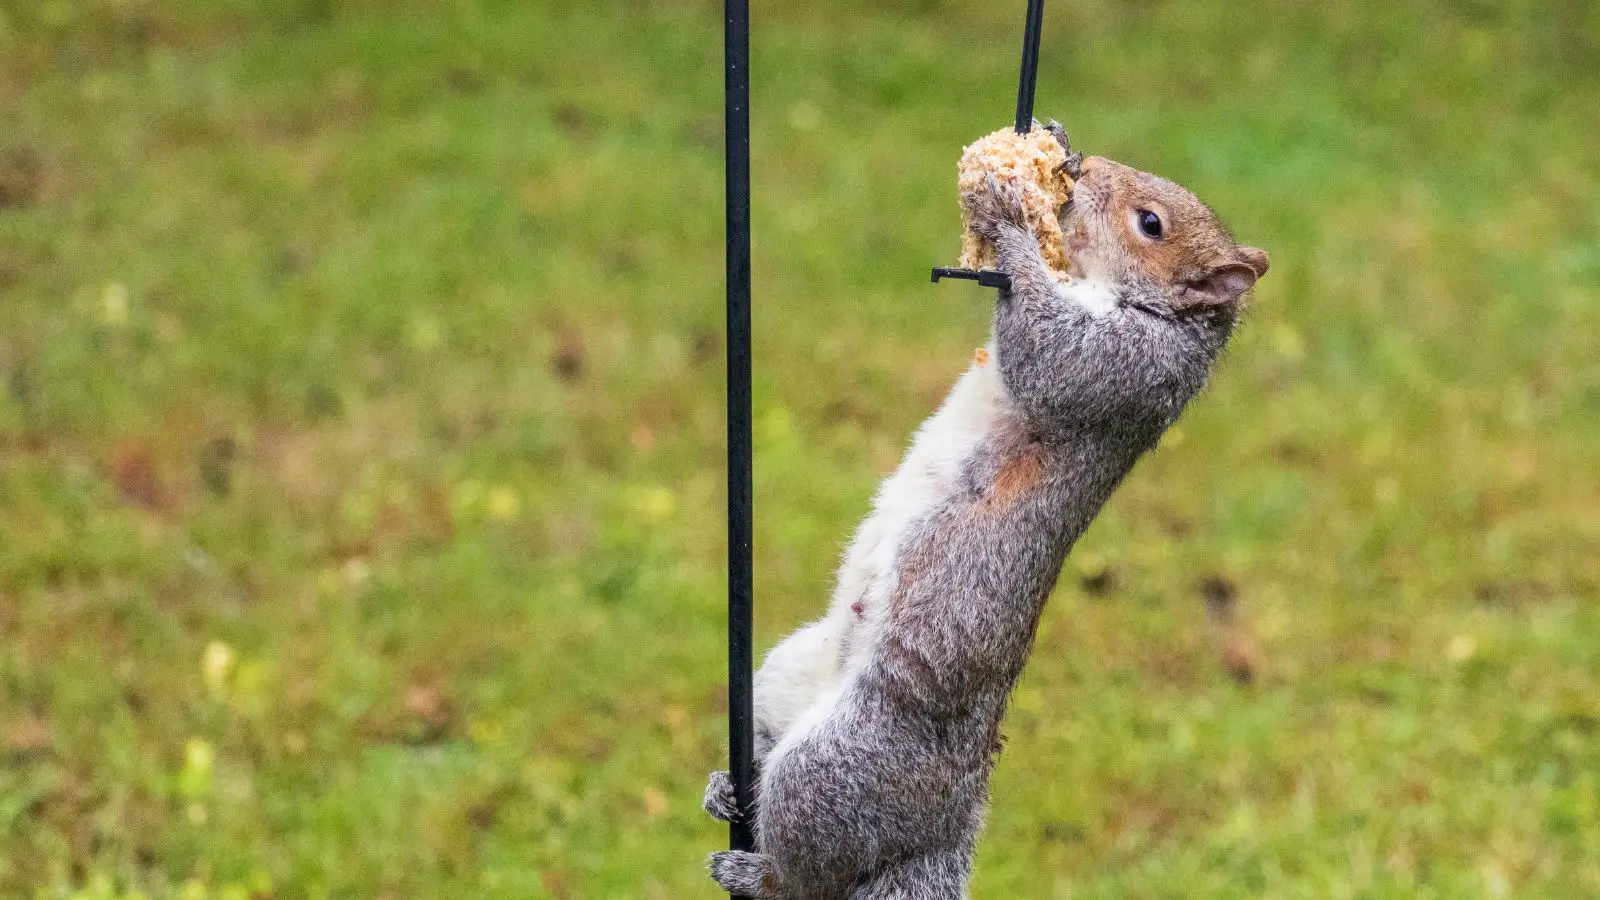 feeding squirrels in your backyard - familyguidecentral.com